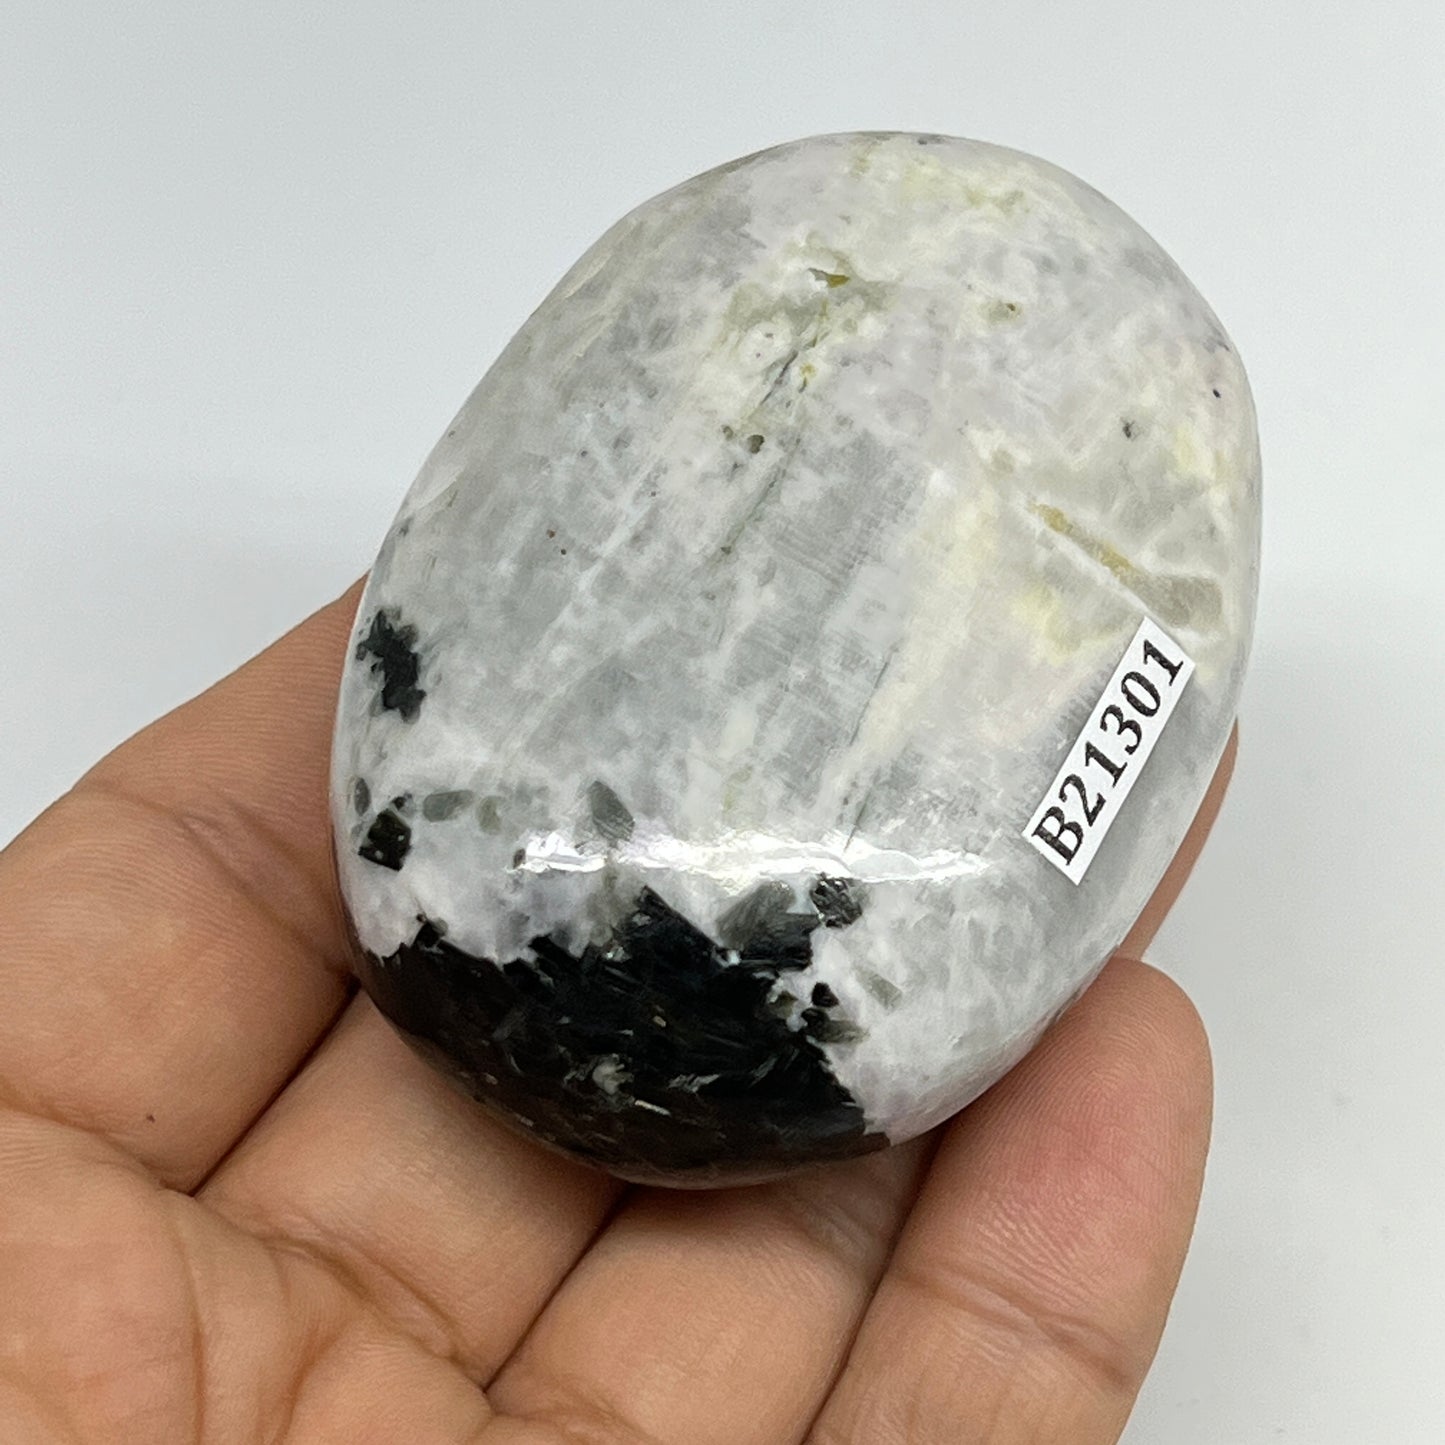 117.6g,2.5"x1.8"x1", Rainbow Moonstone Palm-Stone Polished from India, B21301